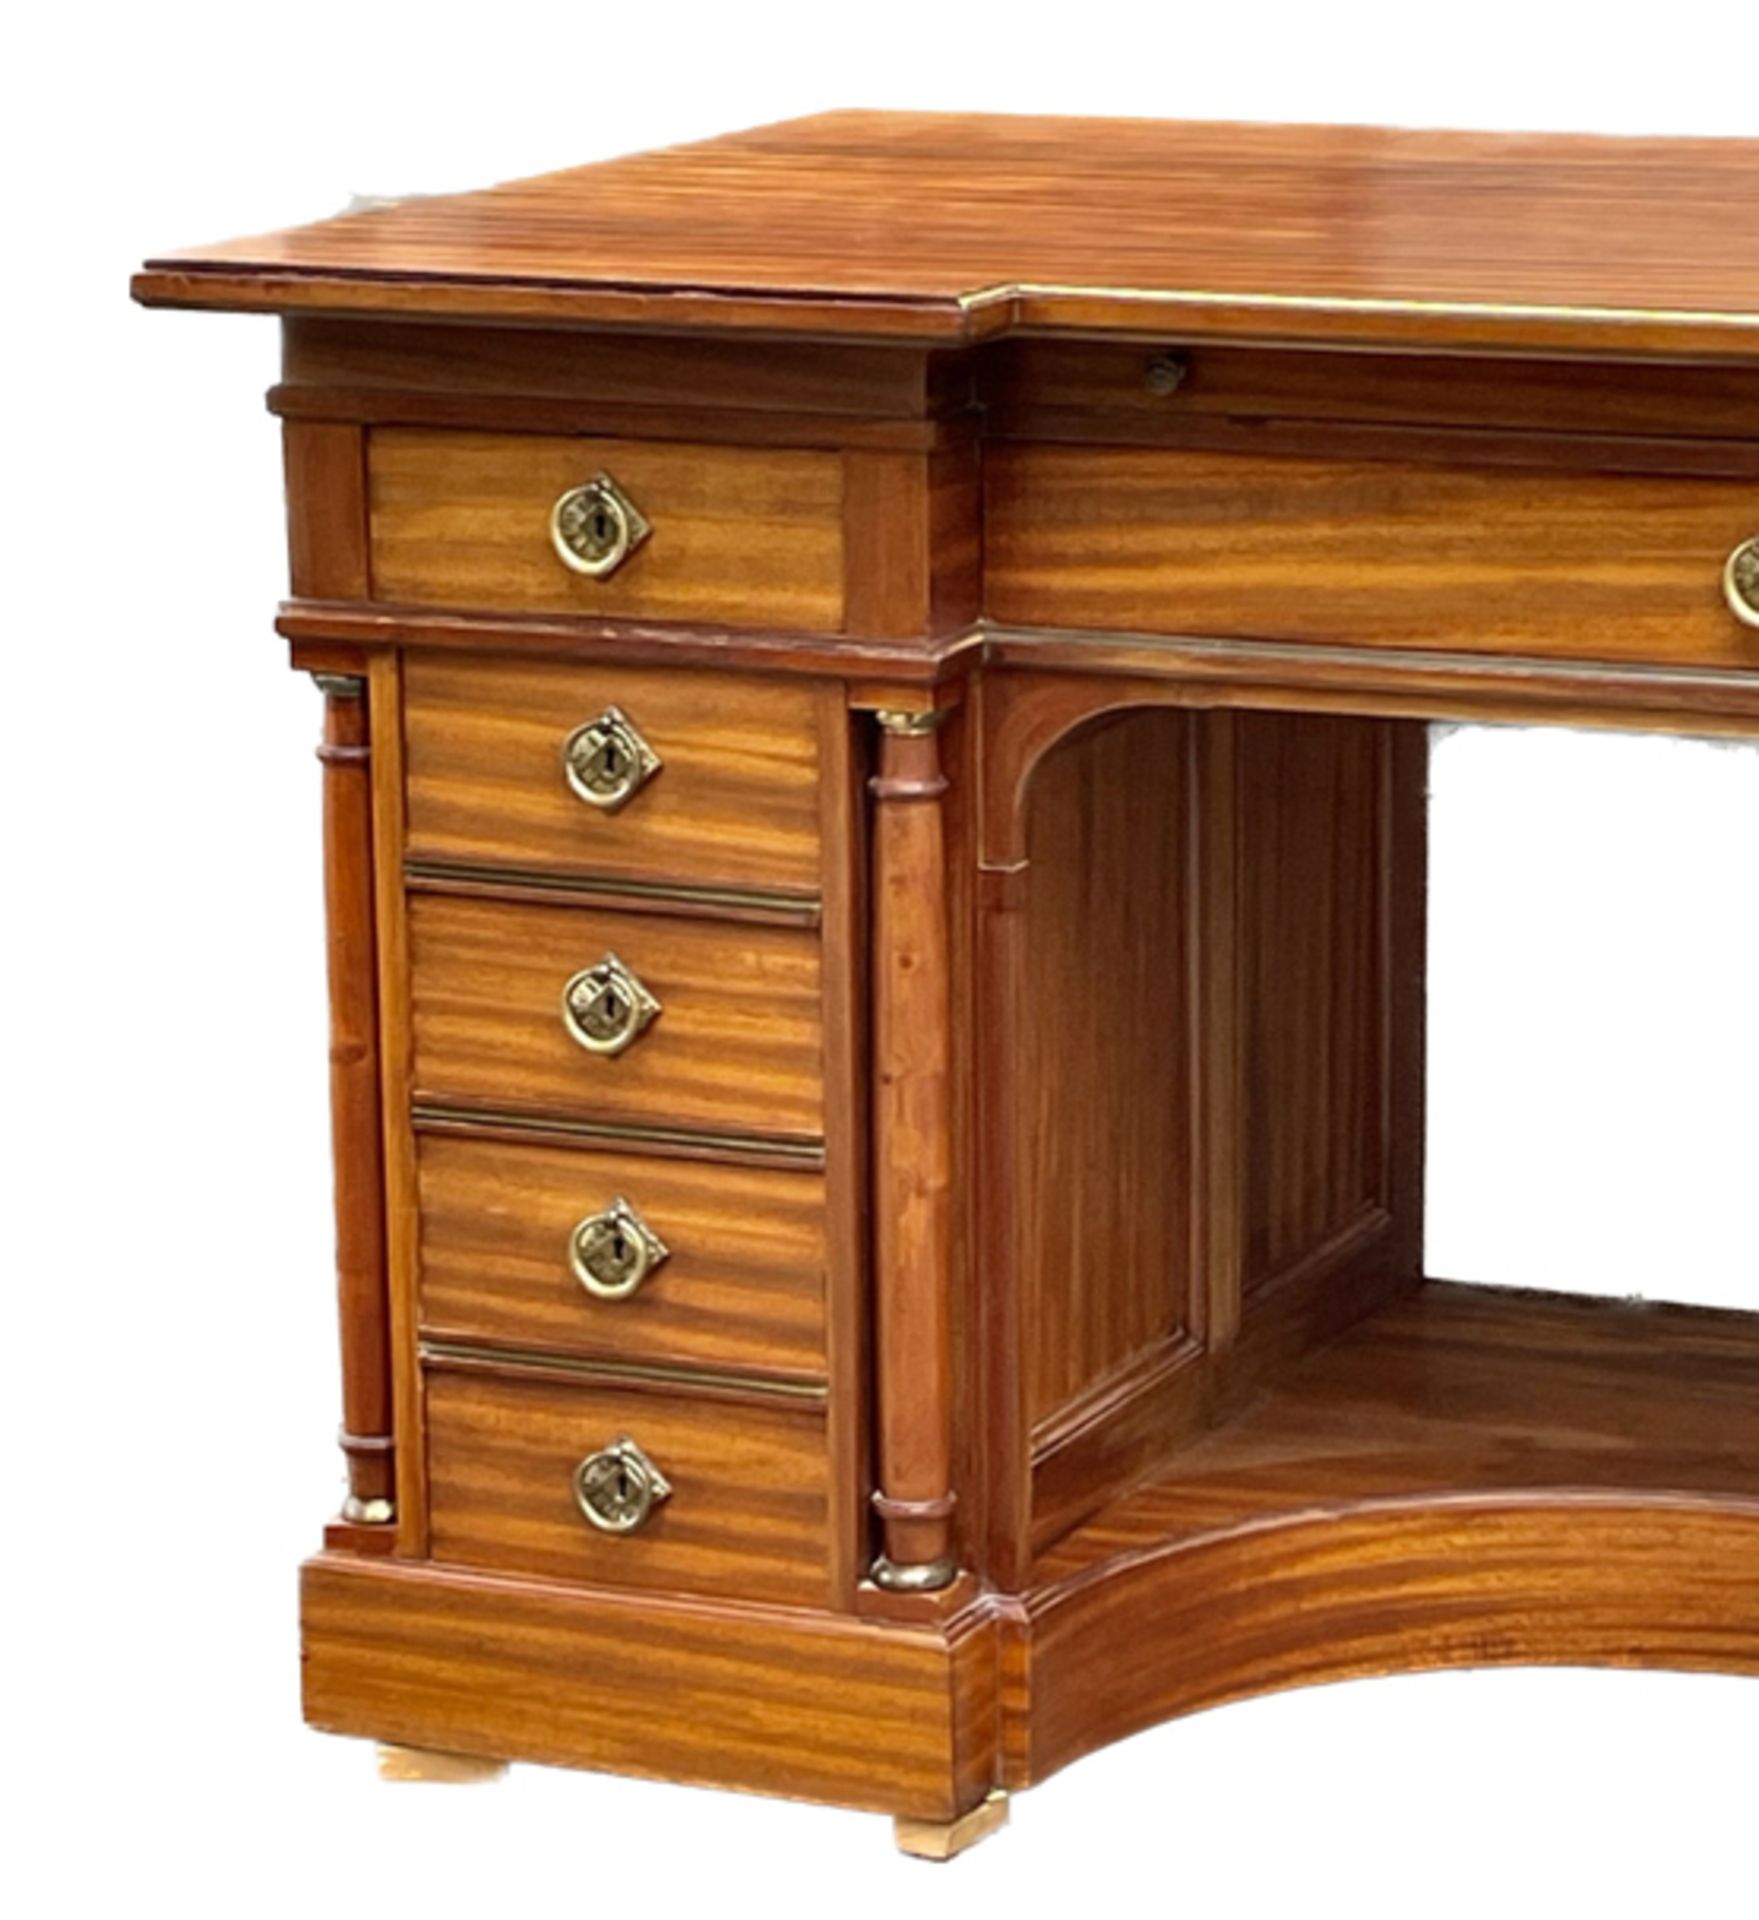 Wilhelminian style desk, c. 1880/90, maker Julius Groschkus Berlin, solid mahogany/veneered, minimal - Image 3 of 3